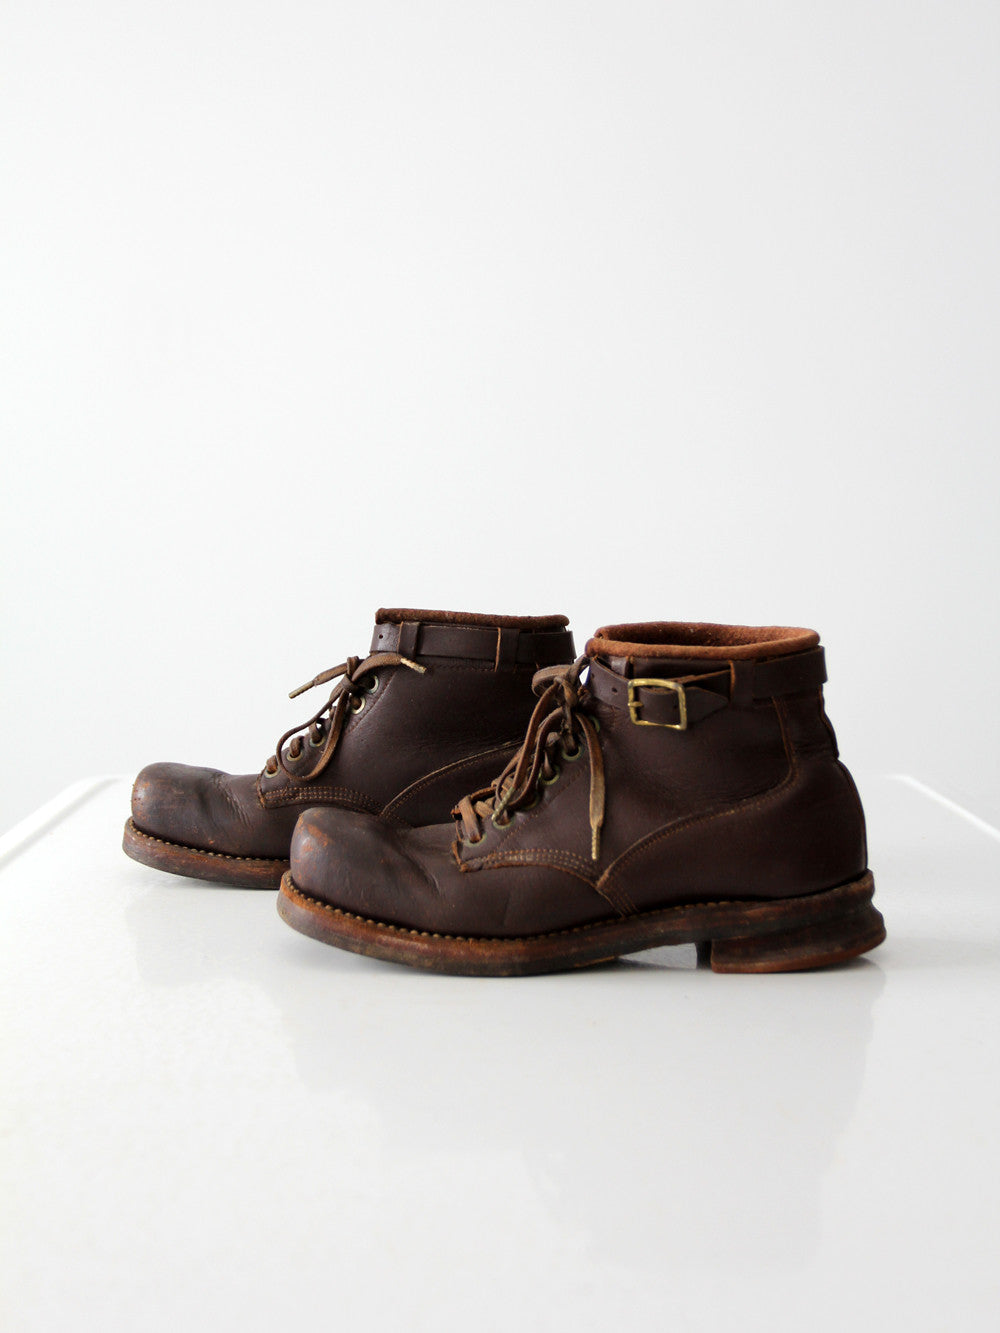 vintage leather ski boots, men's size 9.5